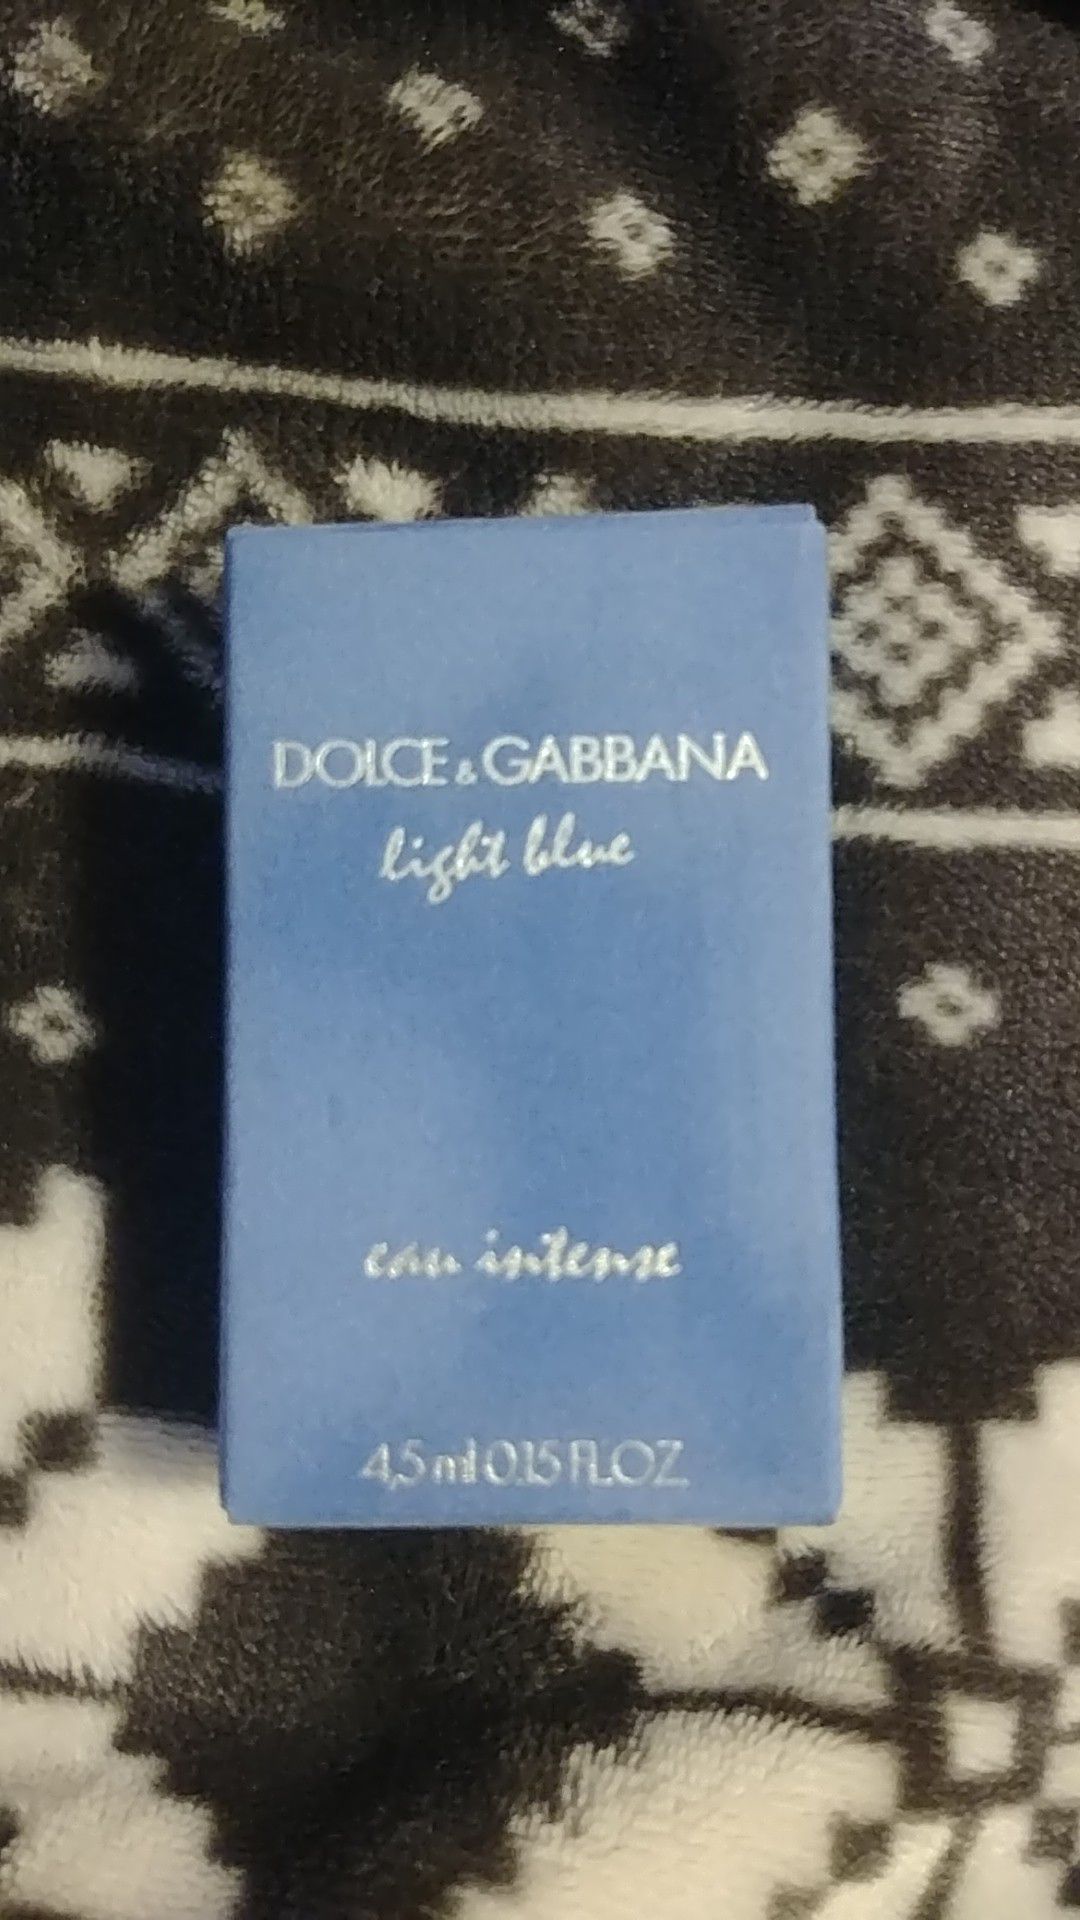 Dolce & Gabbana Light Blue Eau Intense Mini Perfume, Brand New